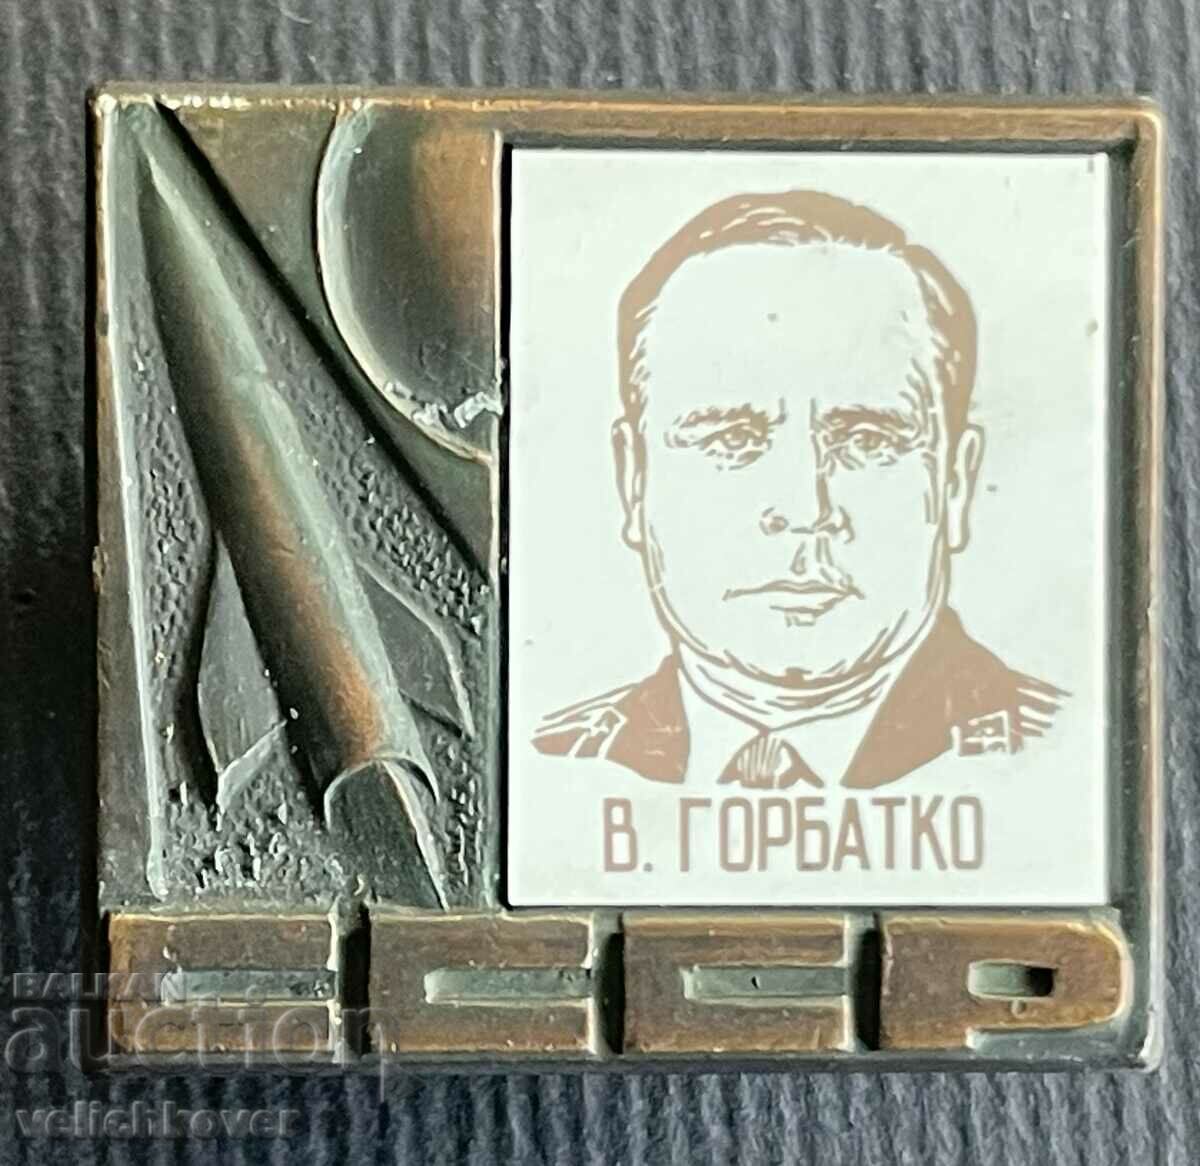 36163 USSR space badge cosmonaut V. Gorbatko